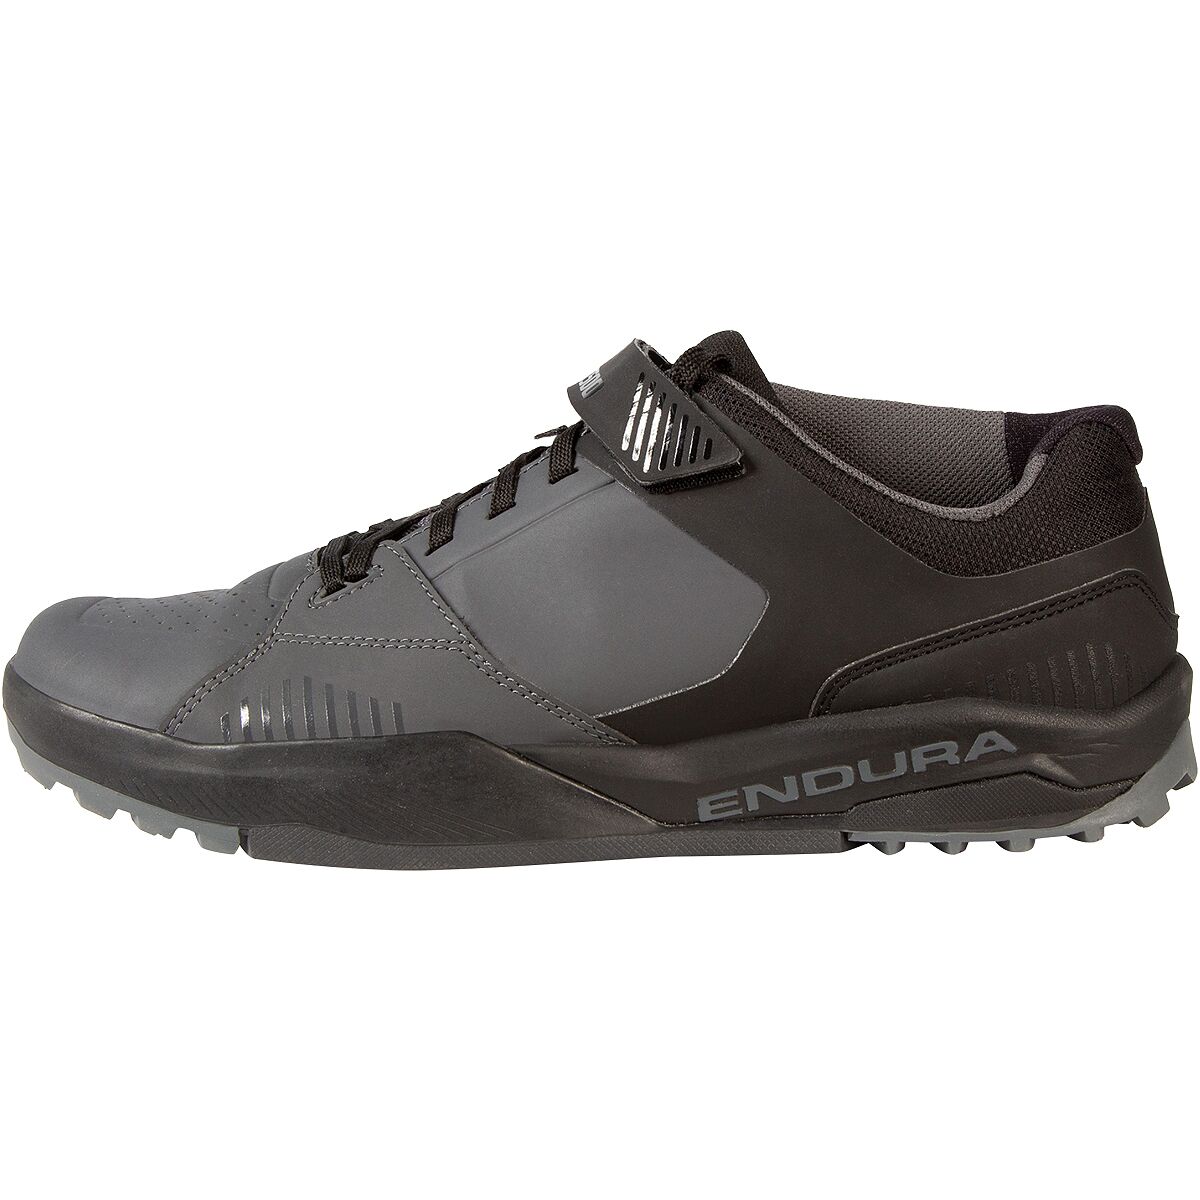 Endura MT500 Burner Flat Shoe Black, 10.0 - Men's